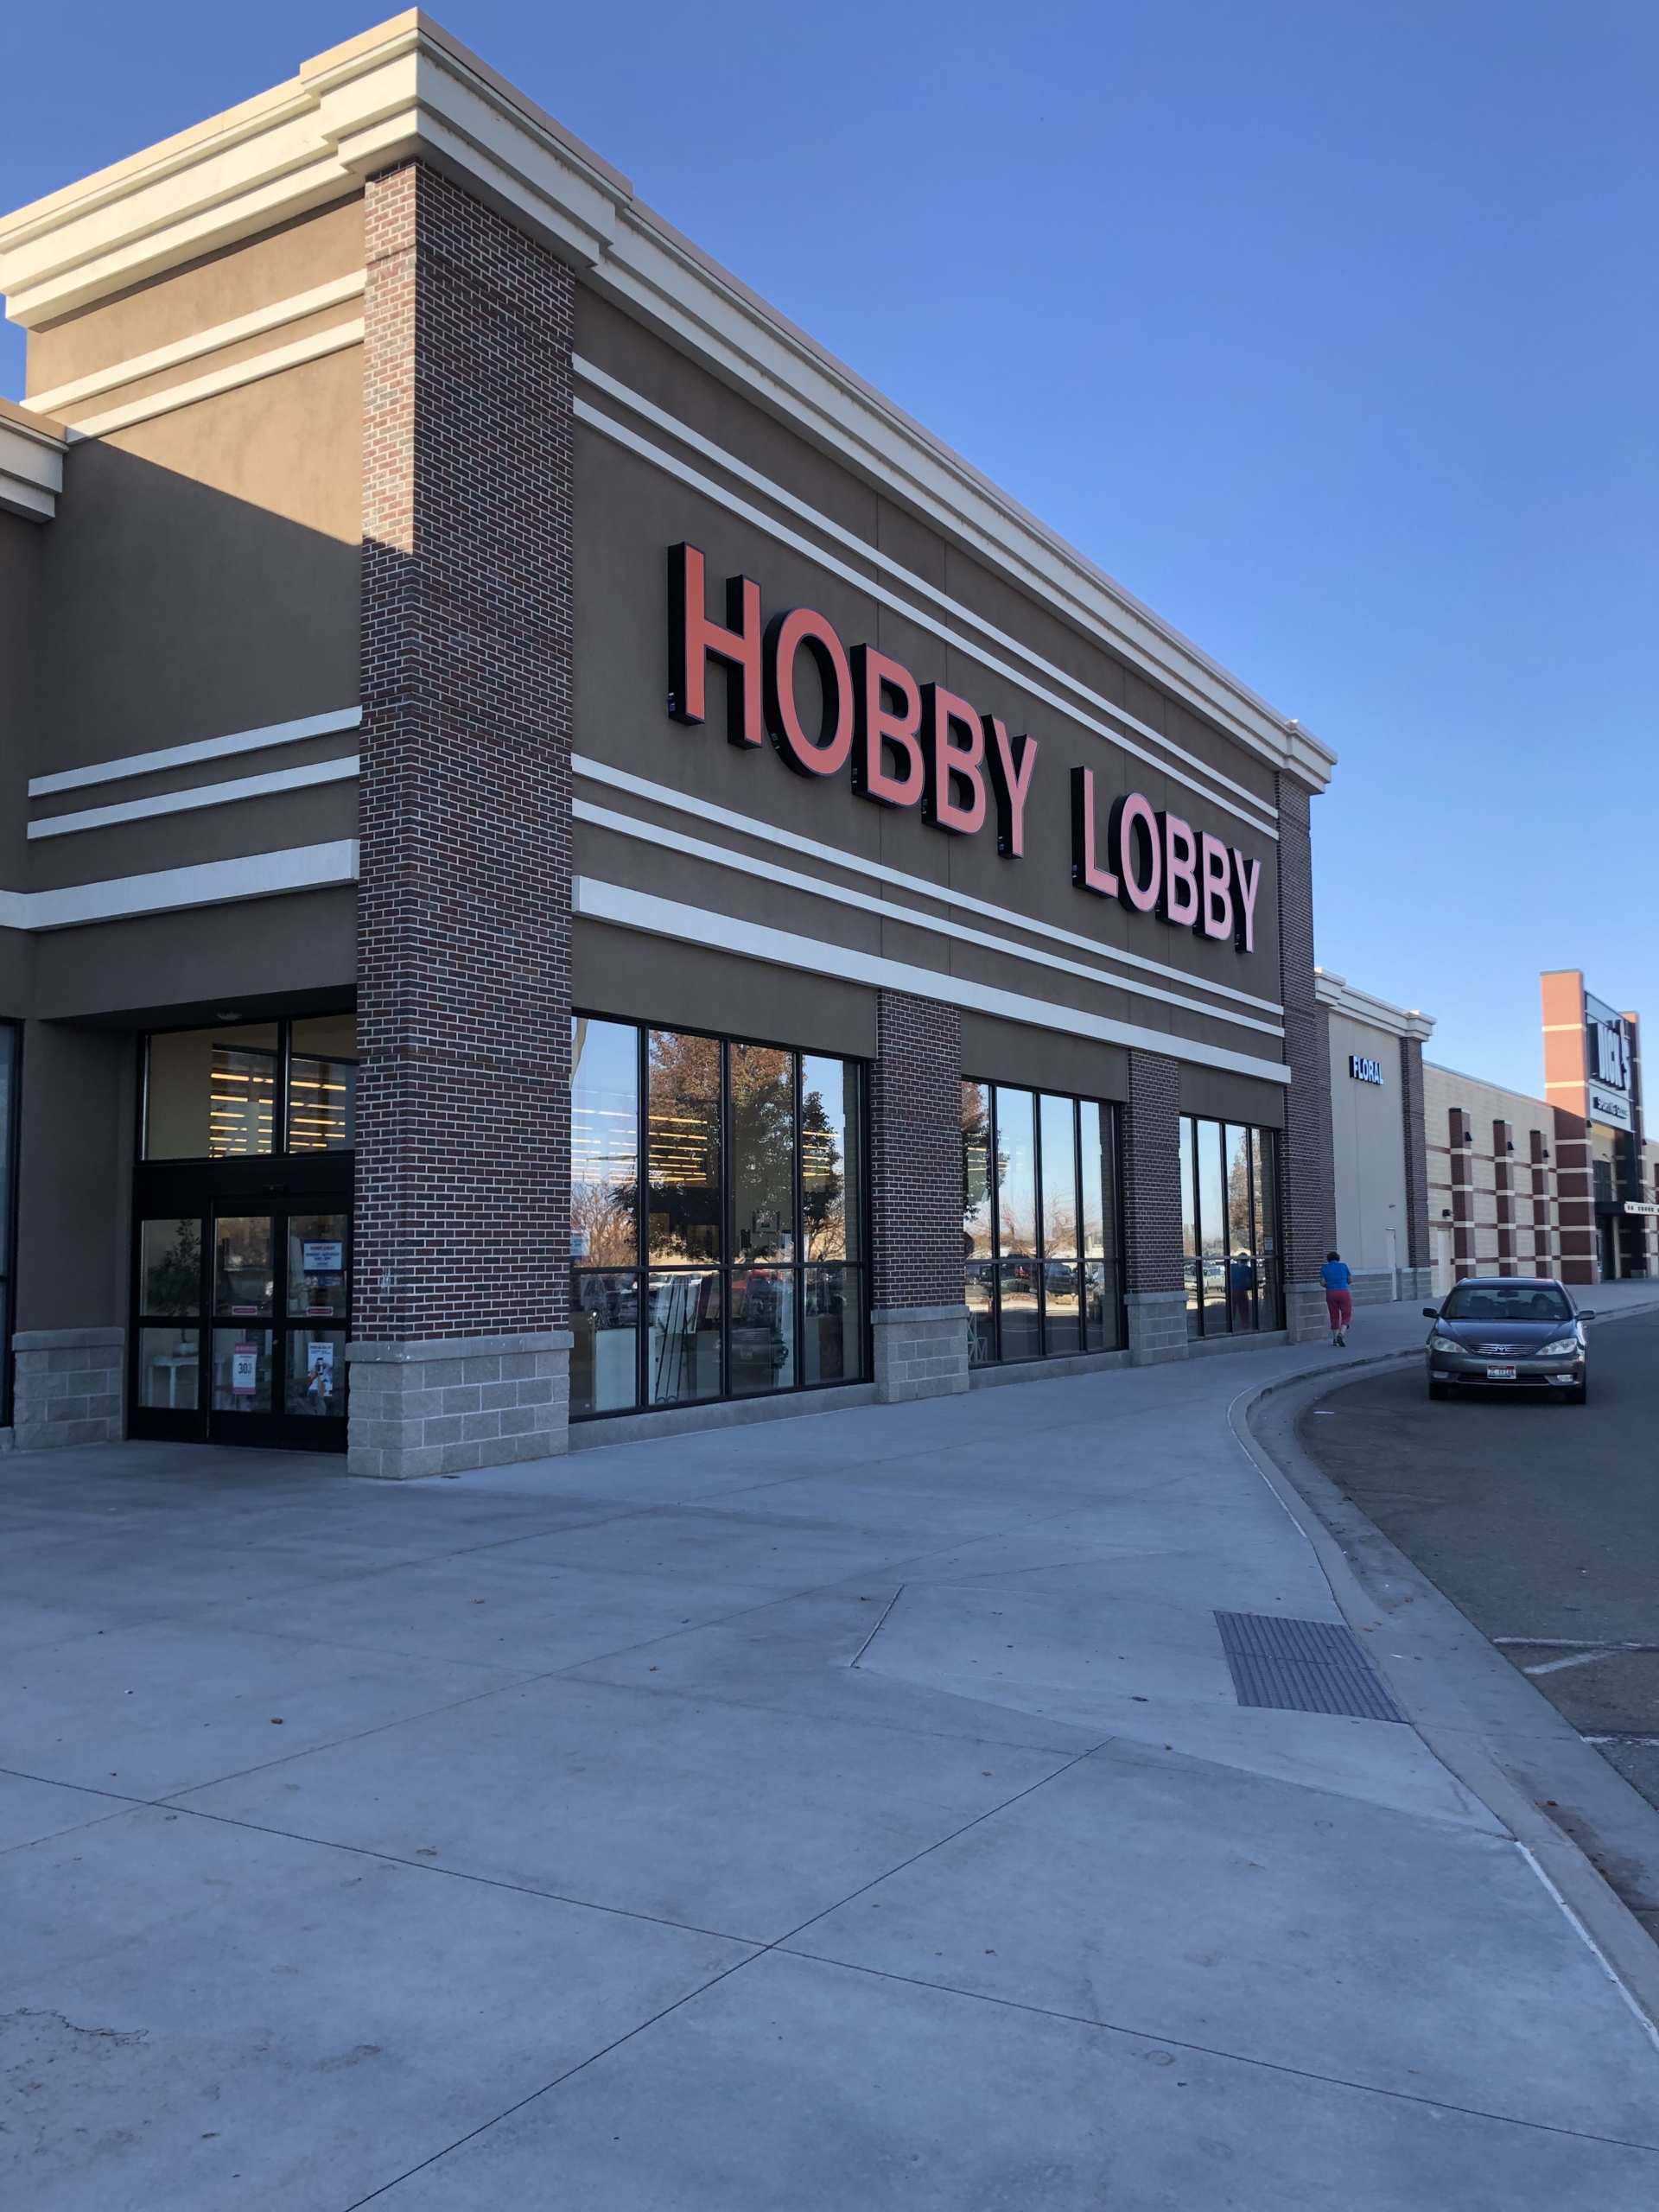 Hobby Lobby storefront in Treasure Valley Crossing